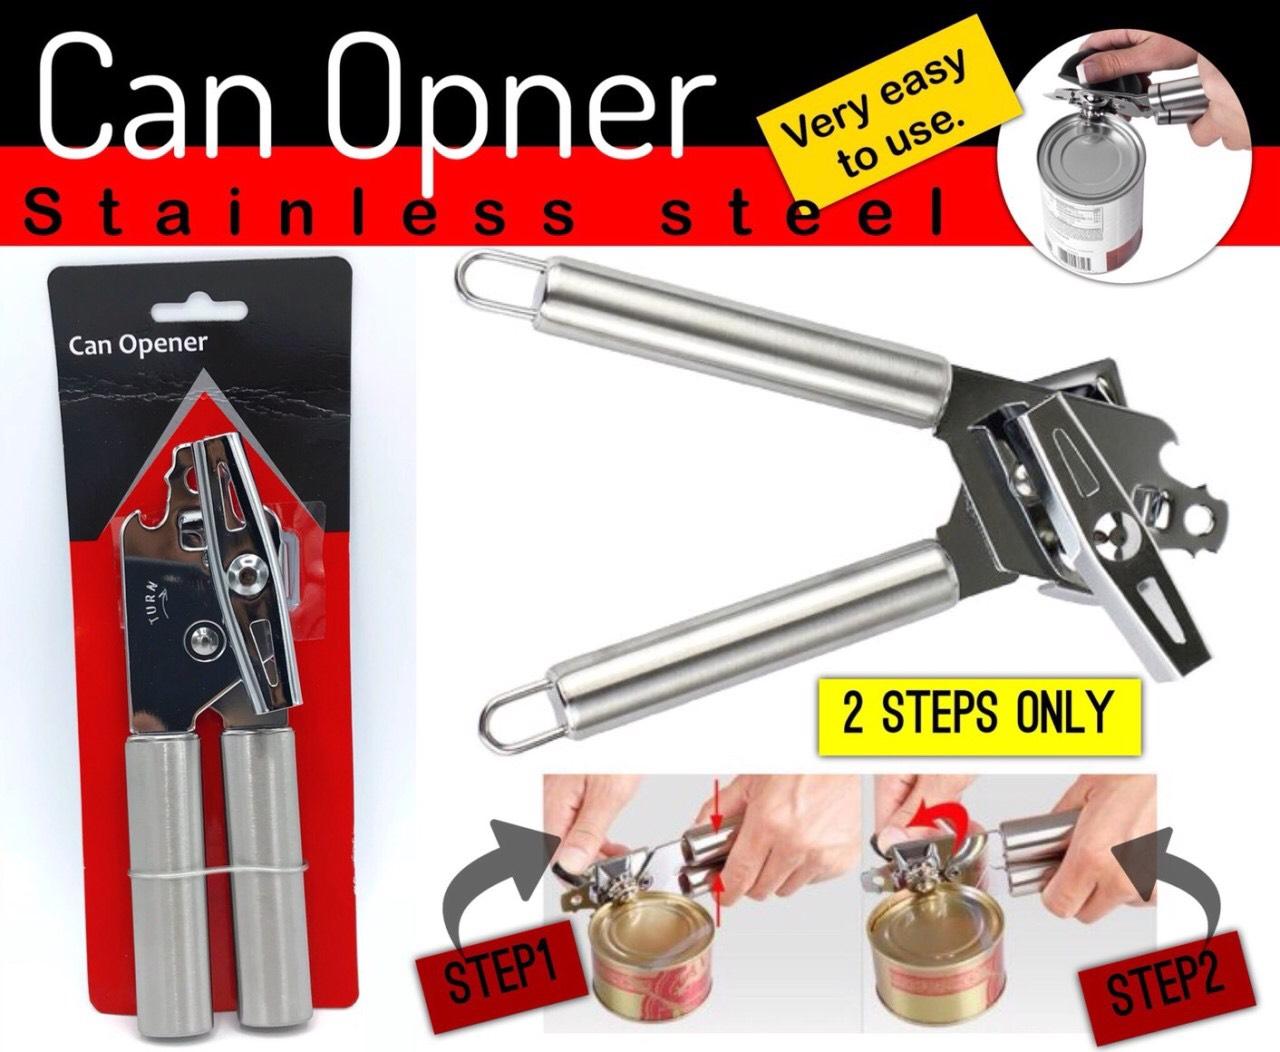  Can Opener (Stainless) ที่เปิดกระป๋อง สแตนเลส ใช้งานสะดวก ติดครัวดี แข็งแรงทนทาน 